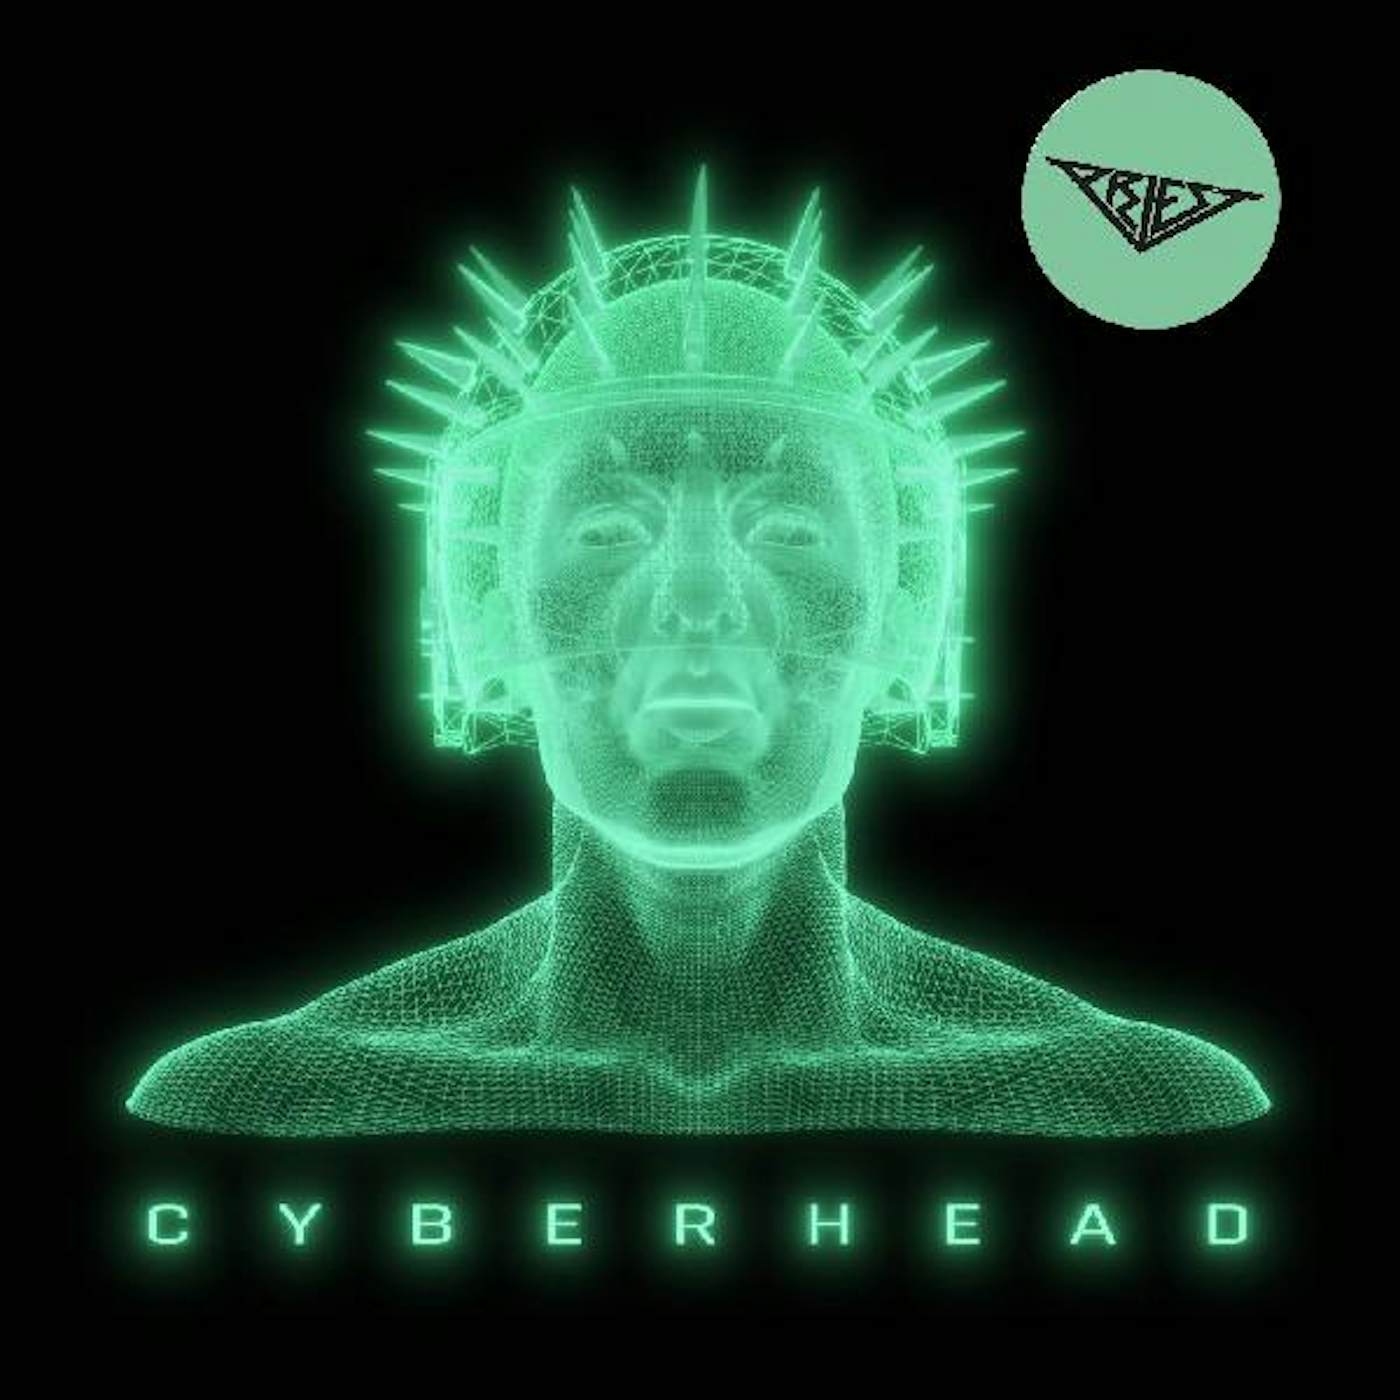 Priest Cyberhead CD